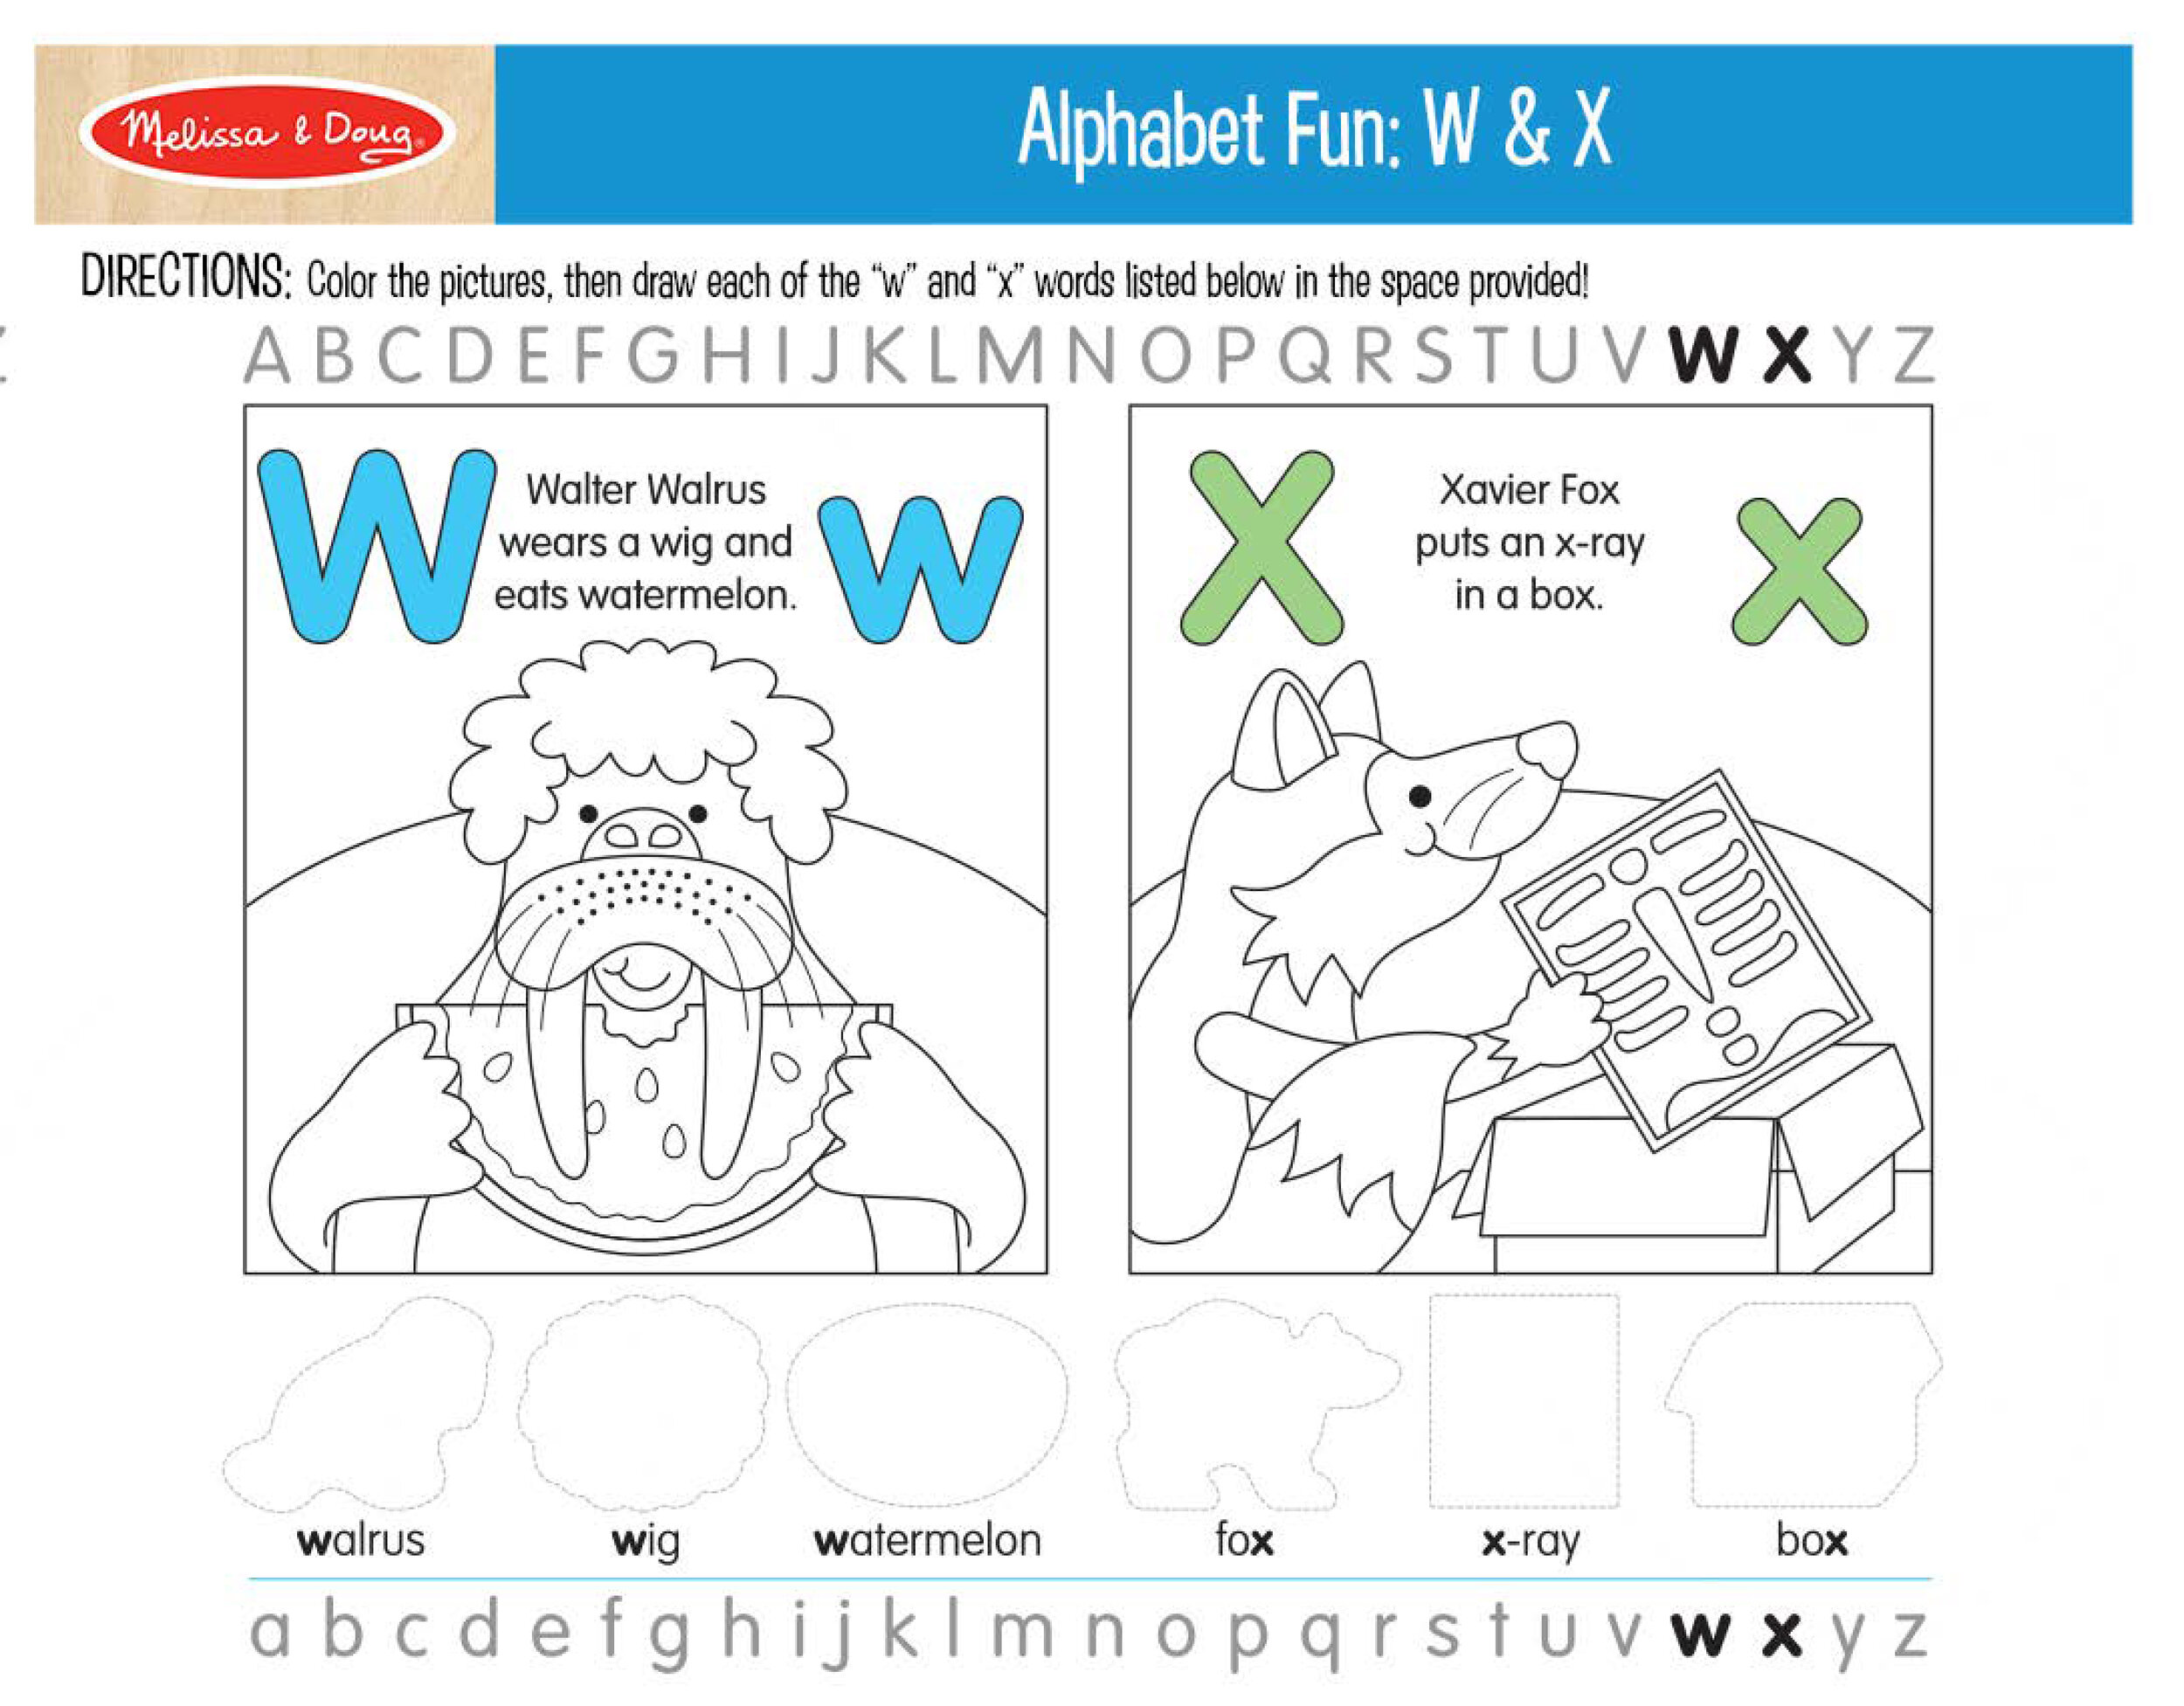 Printable_AlphabetFun-WX.jpg